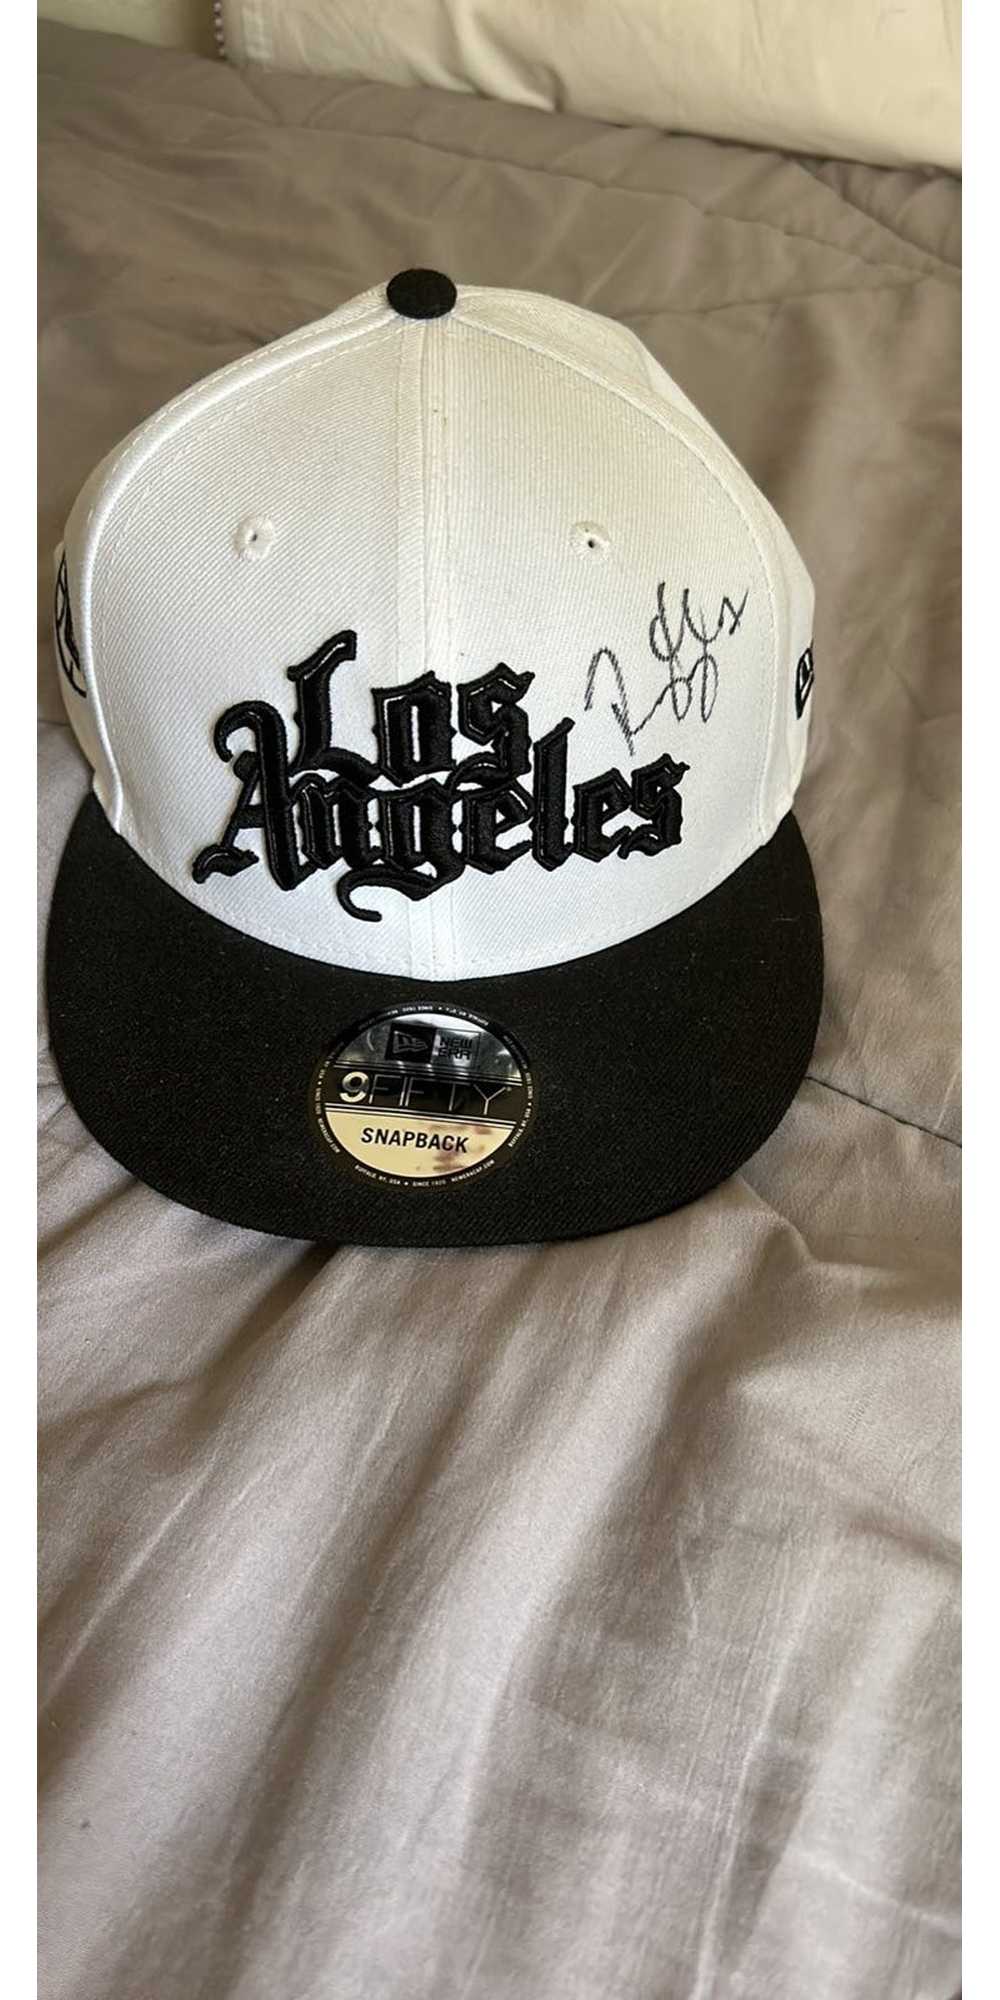 New Era Clipper Reggie Jackson signed hat - image 1